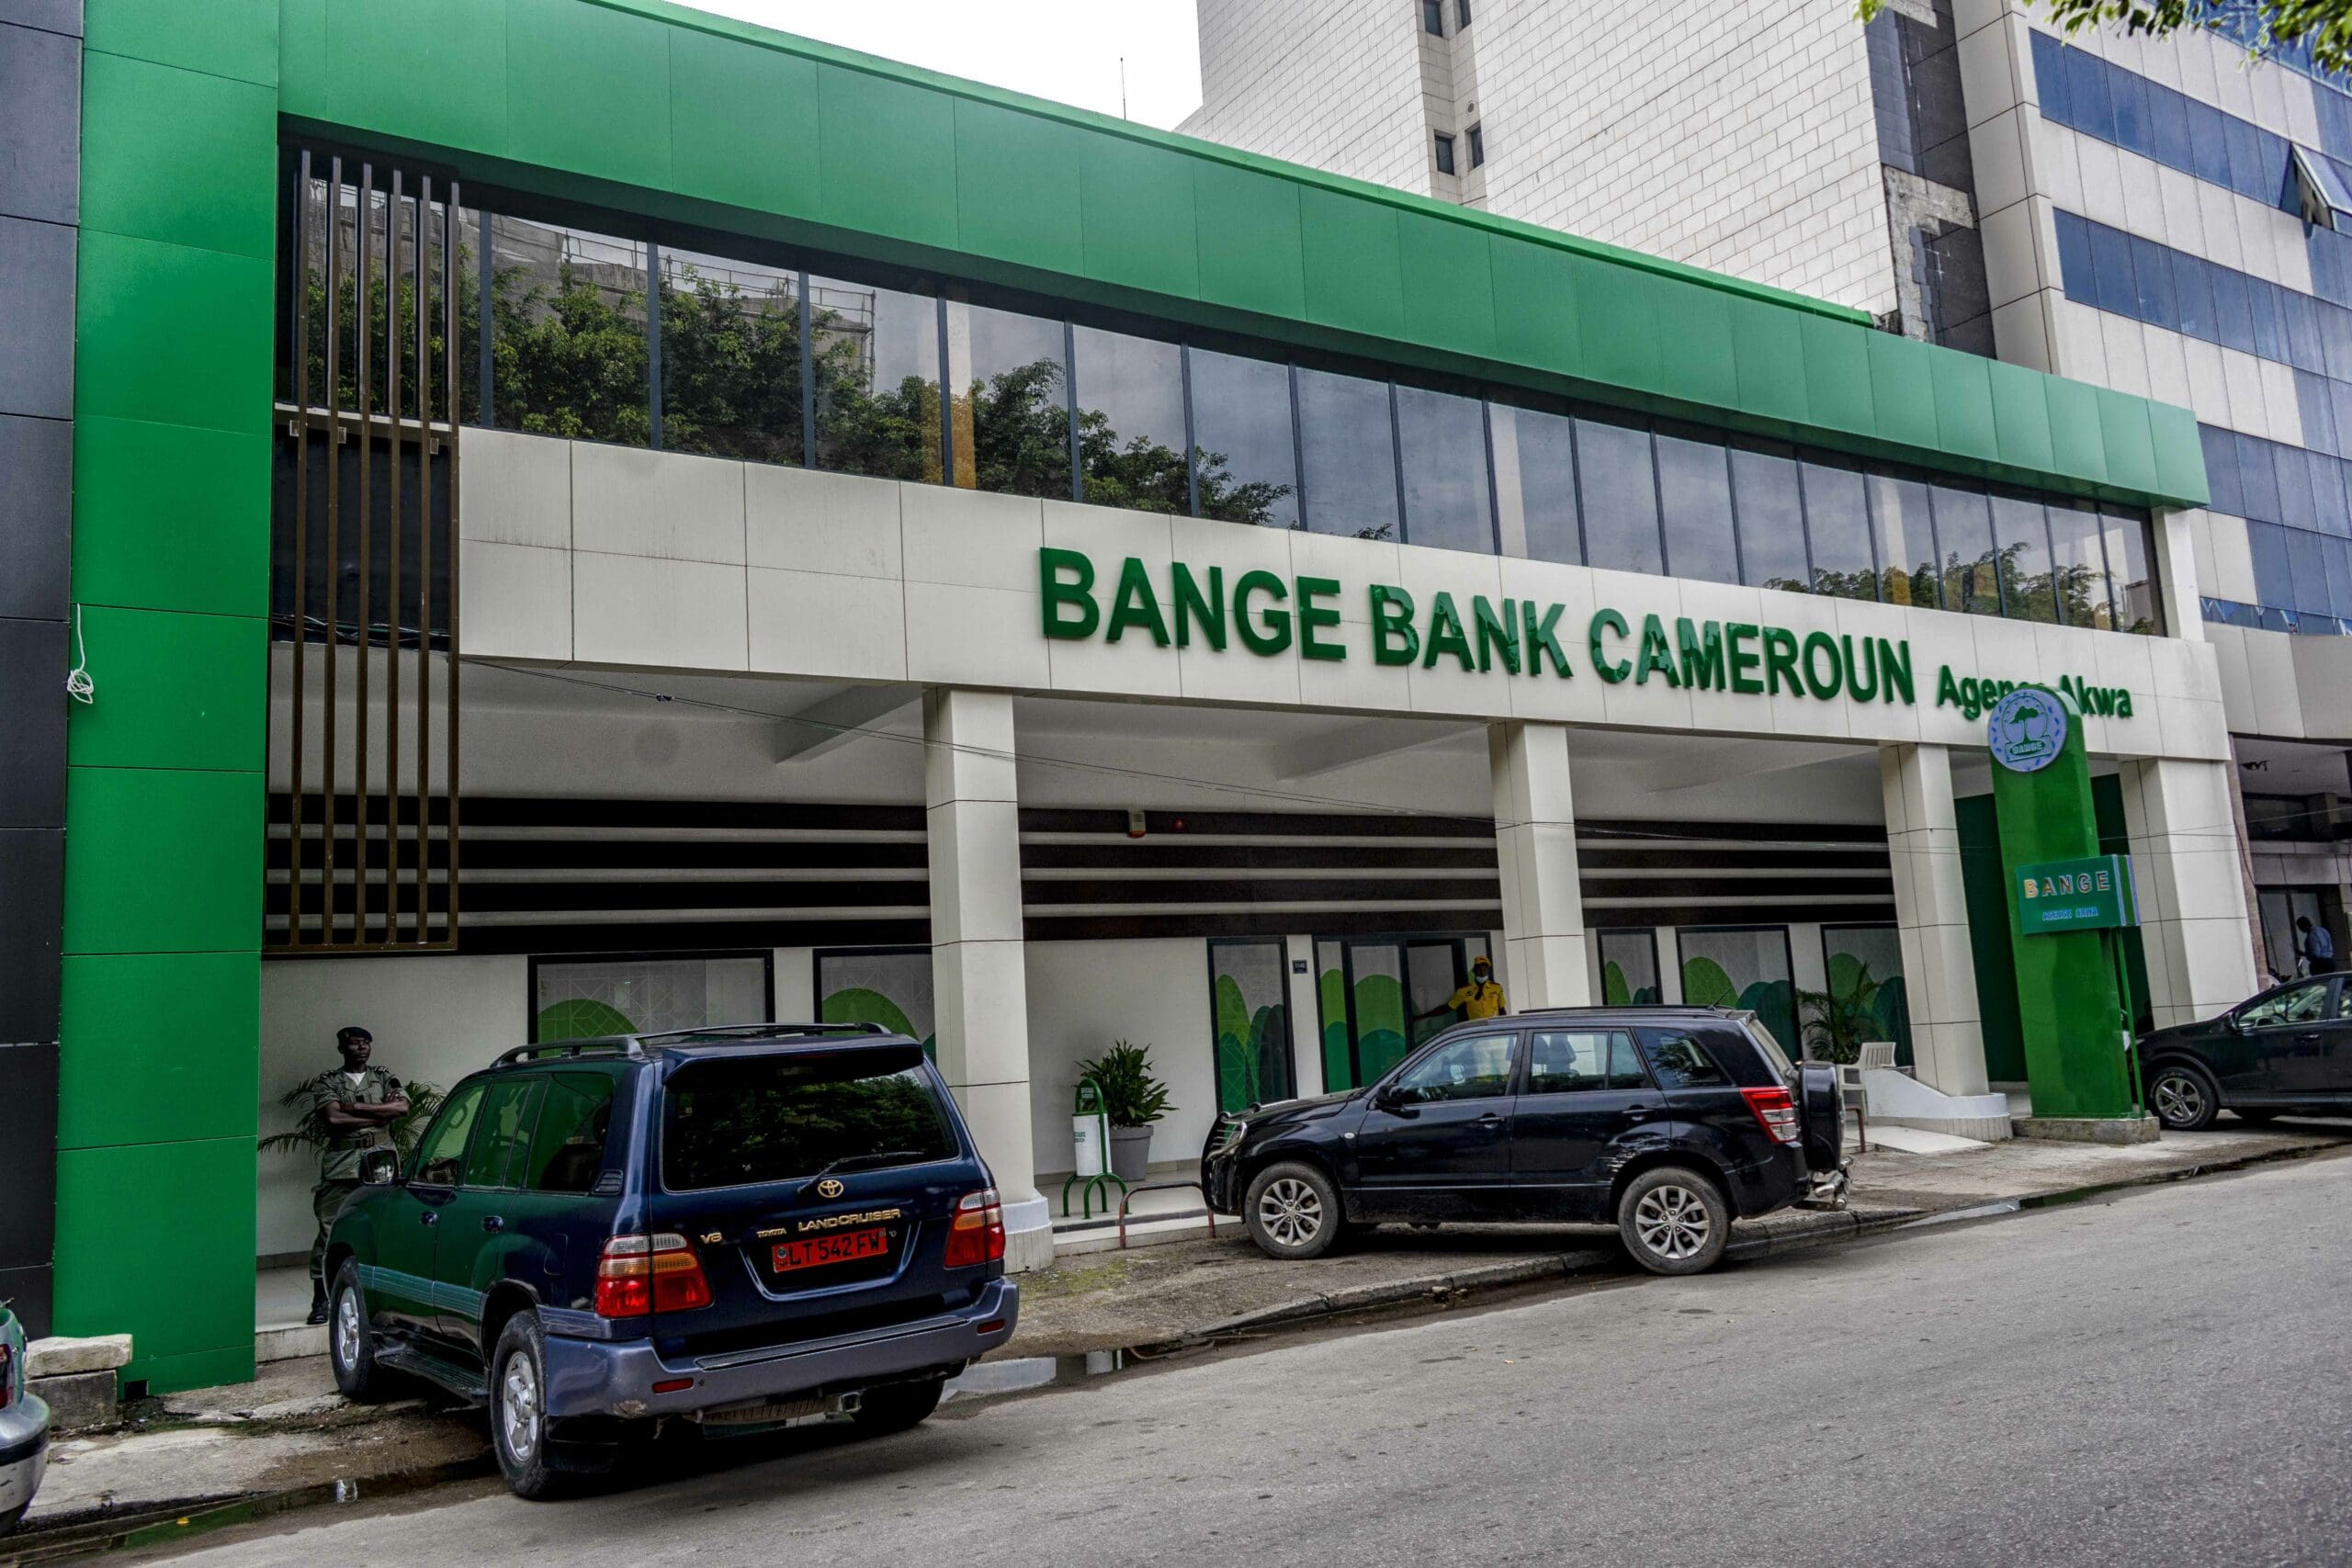 EXCEPTIONAL BANKING EXPERIENCE AT BANGE BANK CAMEROUN